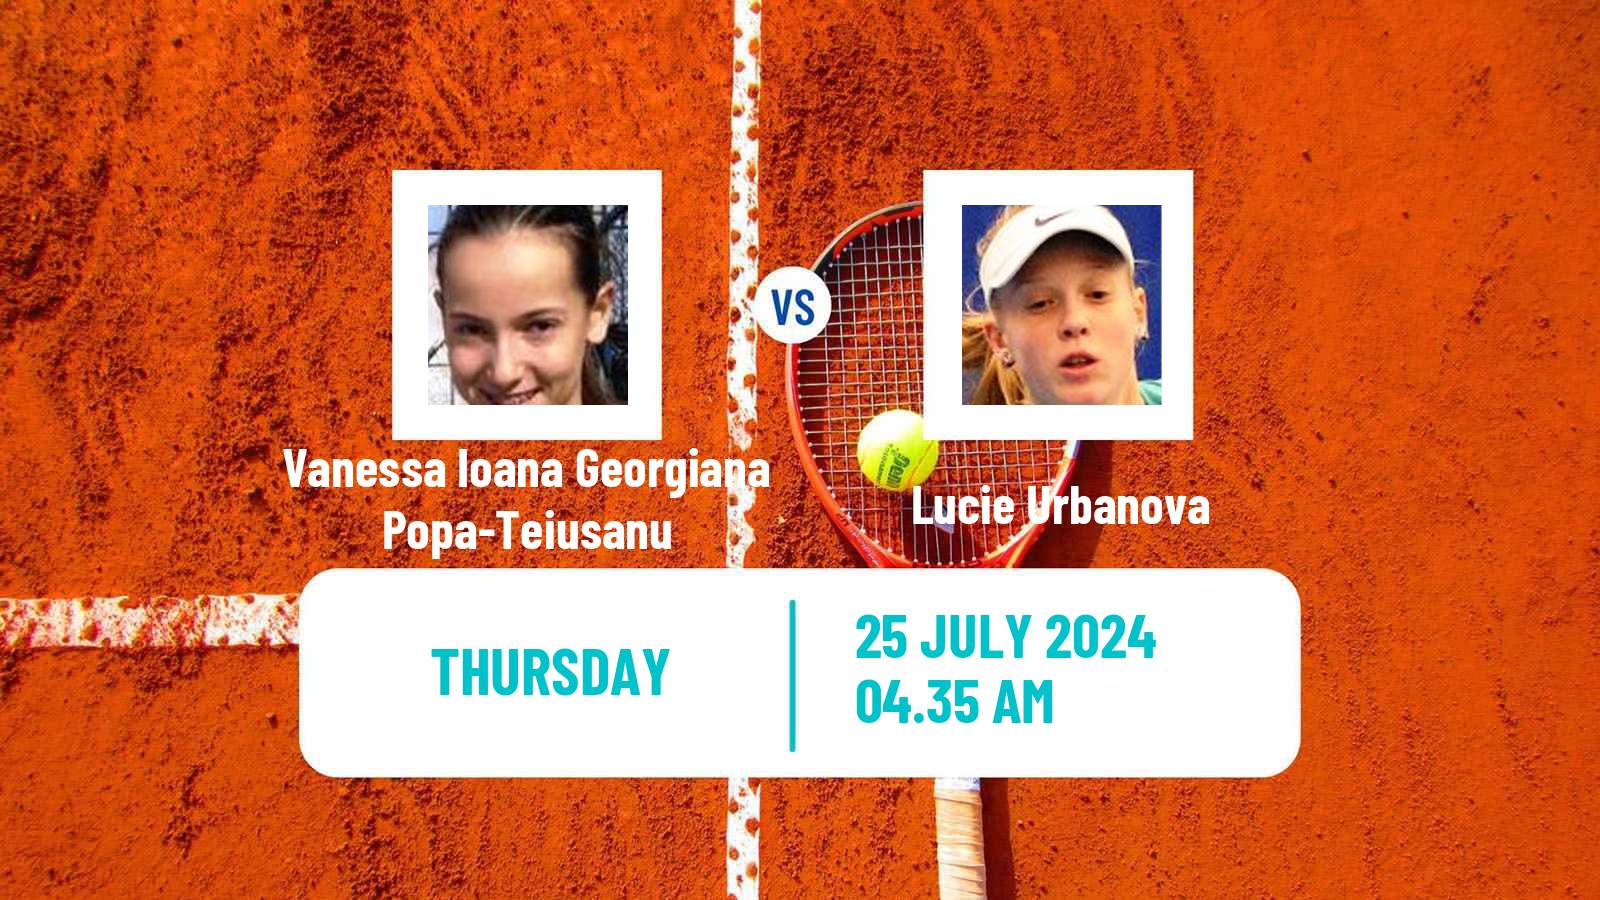 Tennis ITF W15 Satu Mare Women Vanessa Ioana Georgiana Popa-Teiusanu - Lucie Urbanova